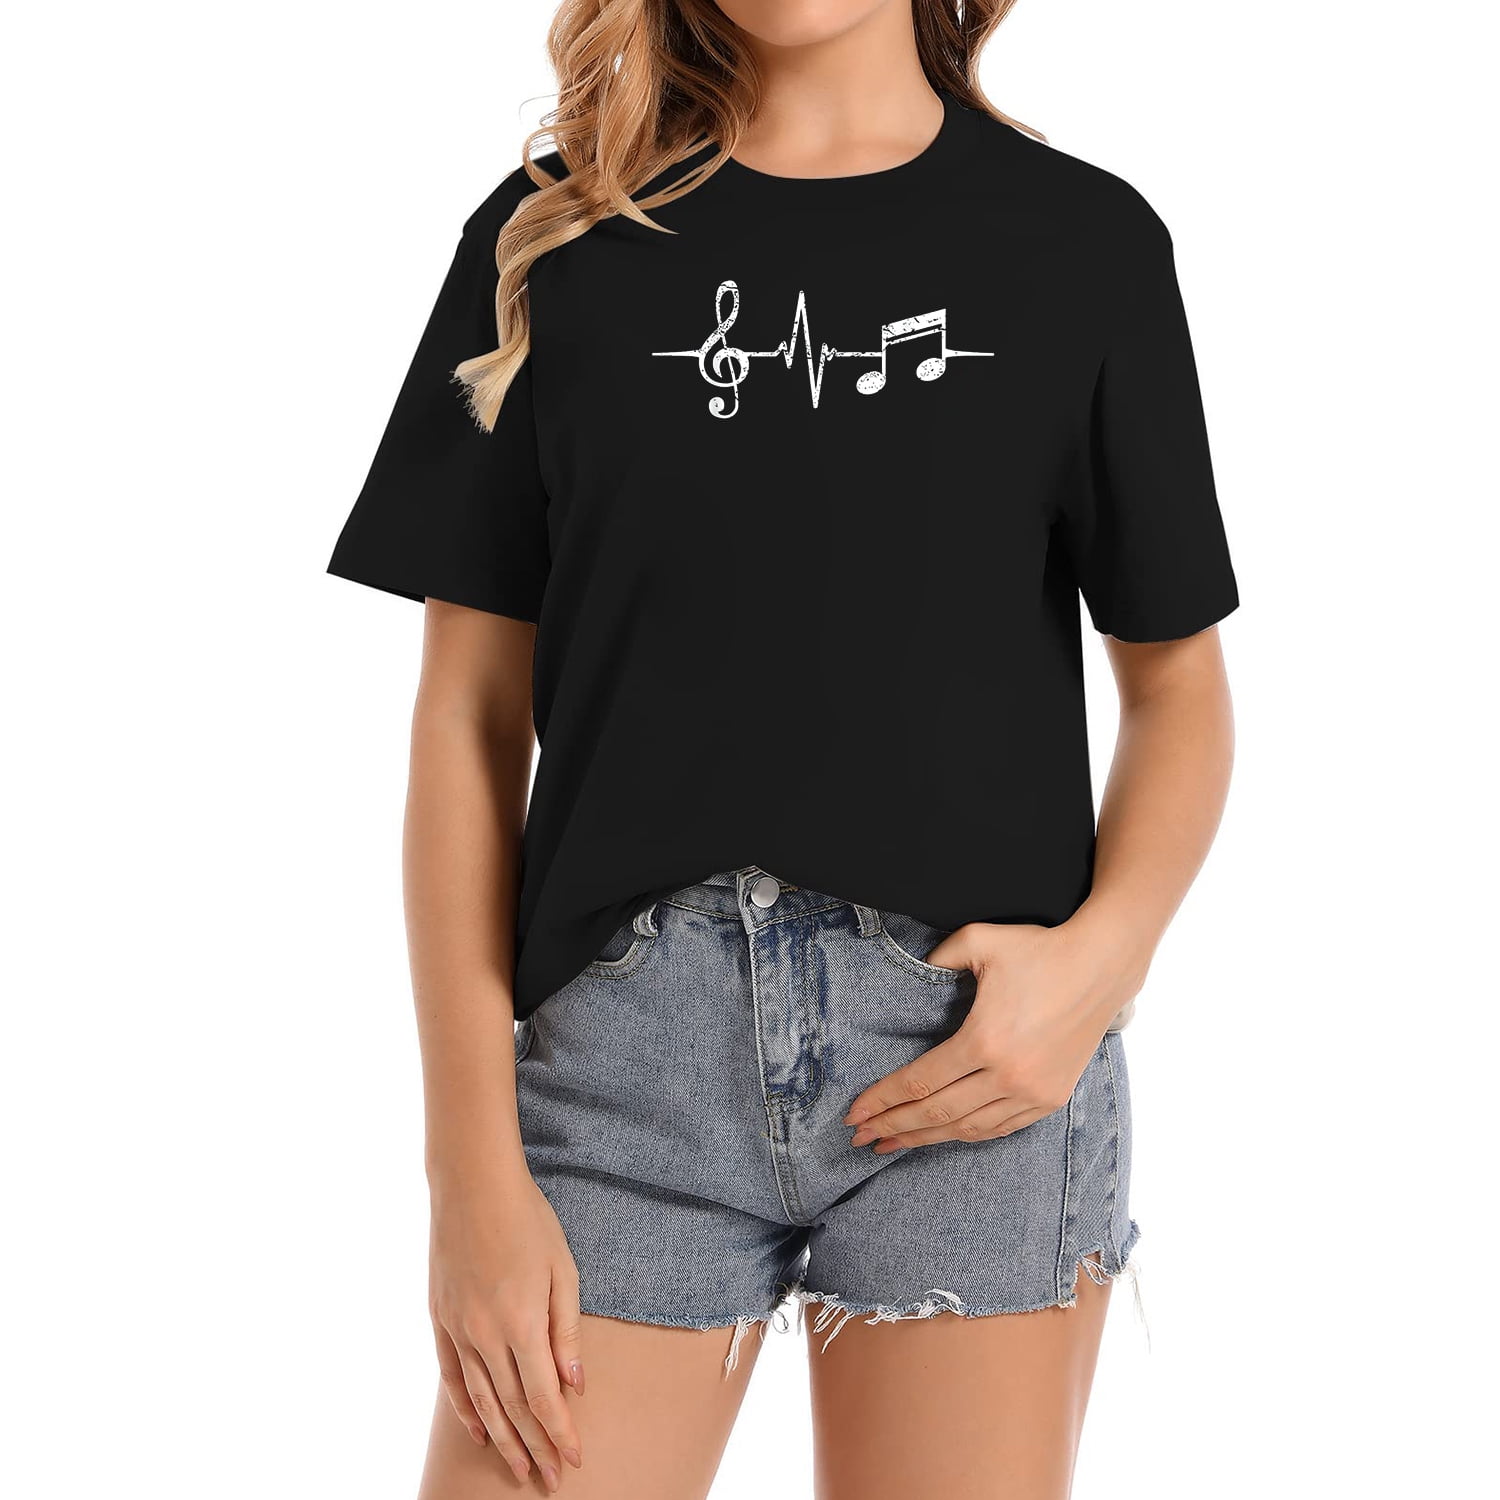 Treble Clef Heartbeat Musical Notes Clothing Musician T-Shirt - Walmart.com